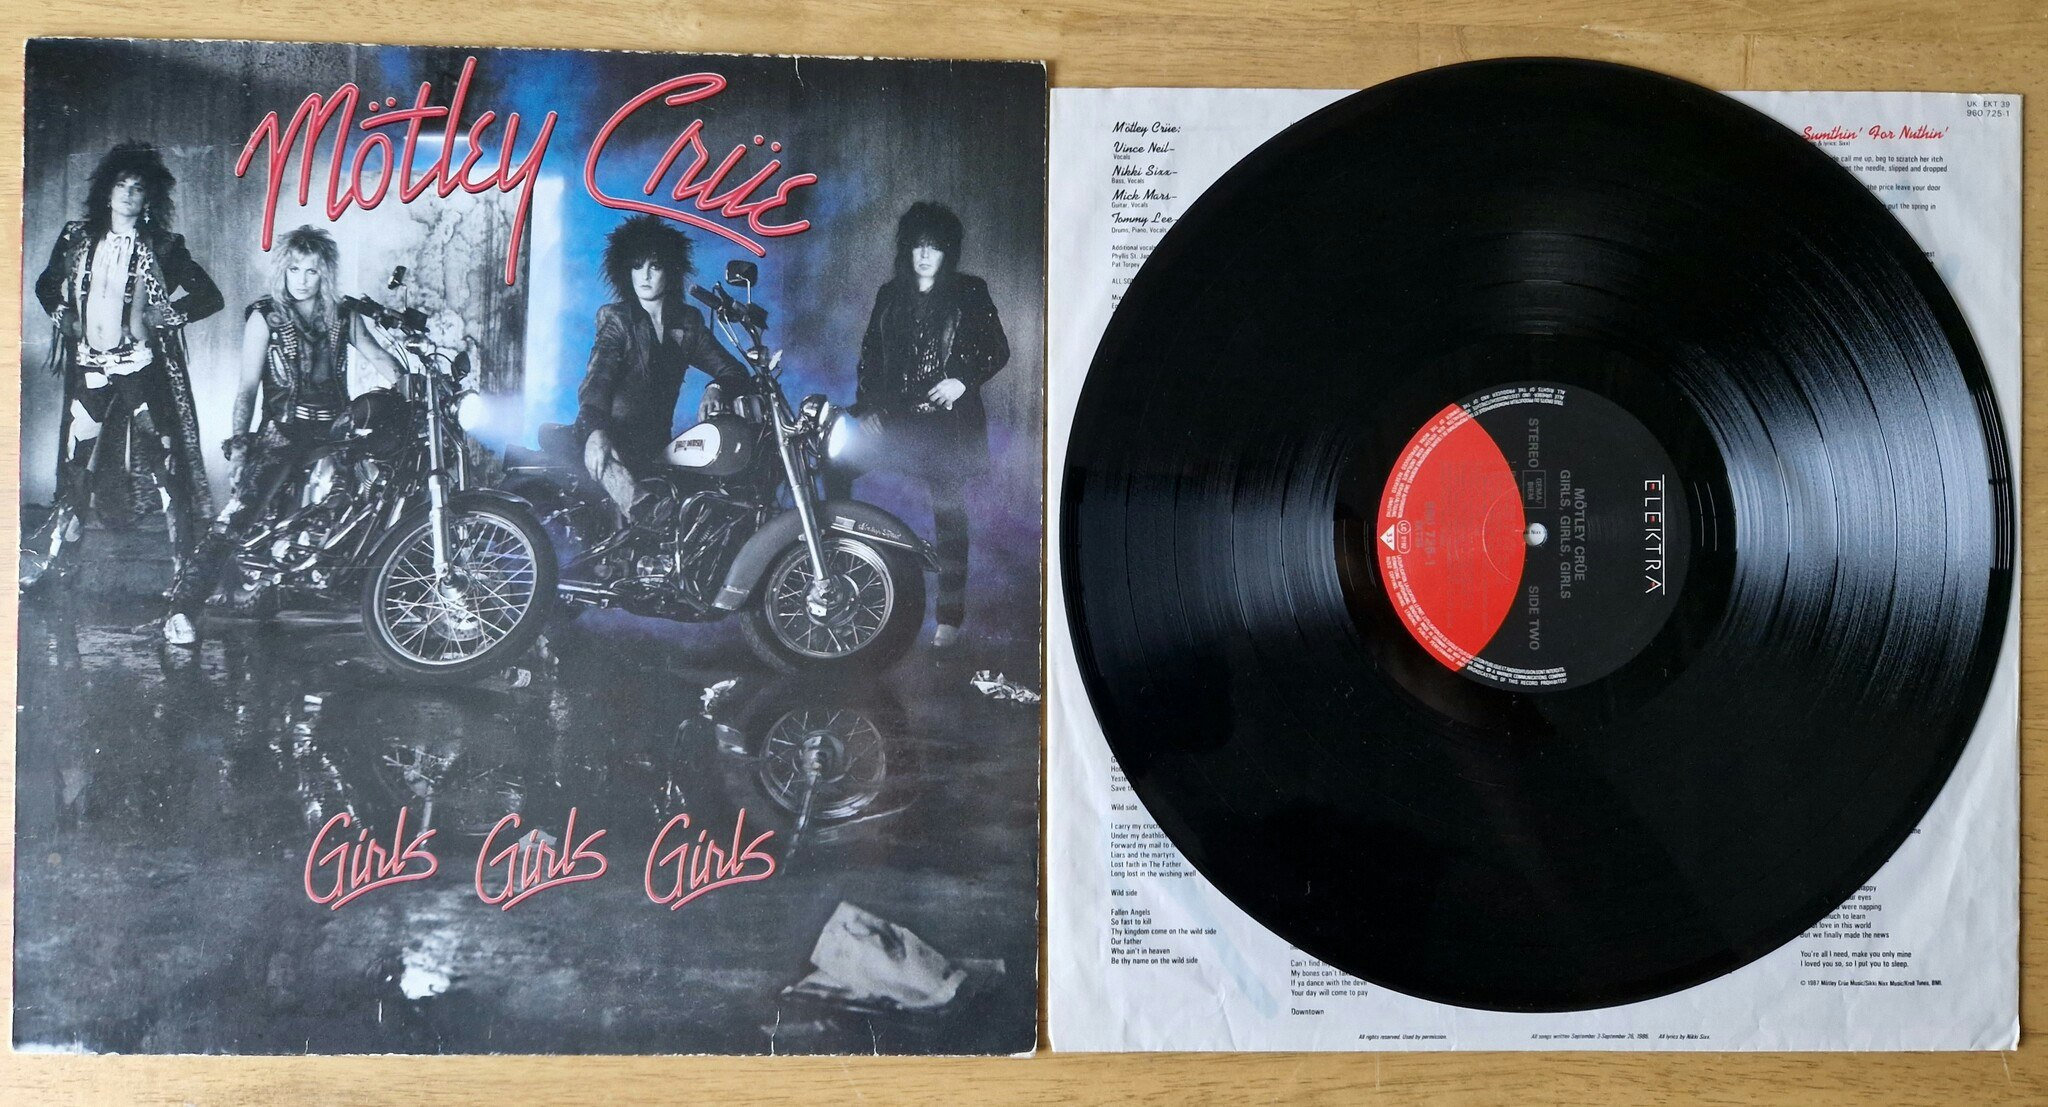 Mötley Crue, Girls, girls, girls. Vinyl LP